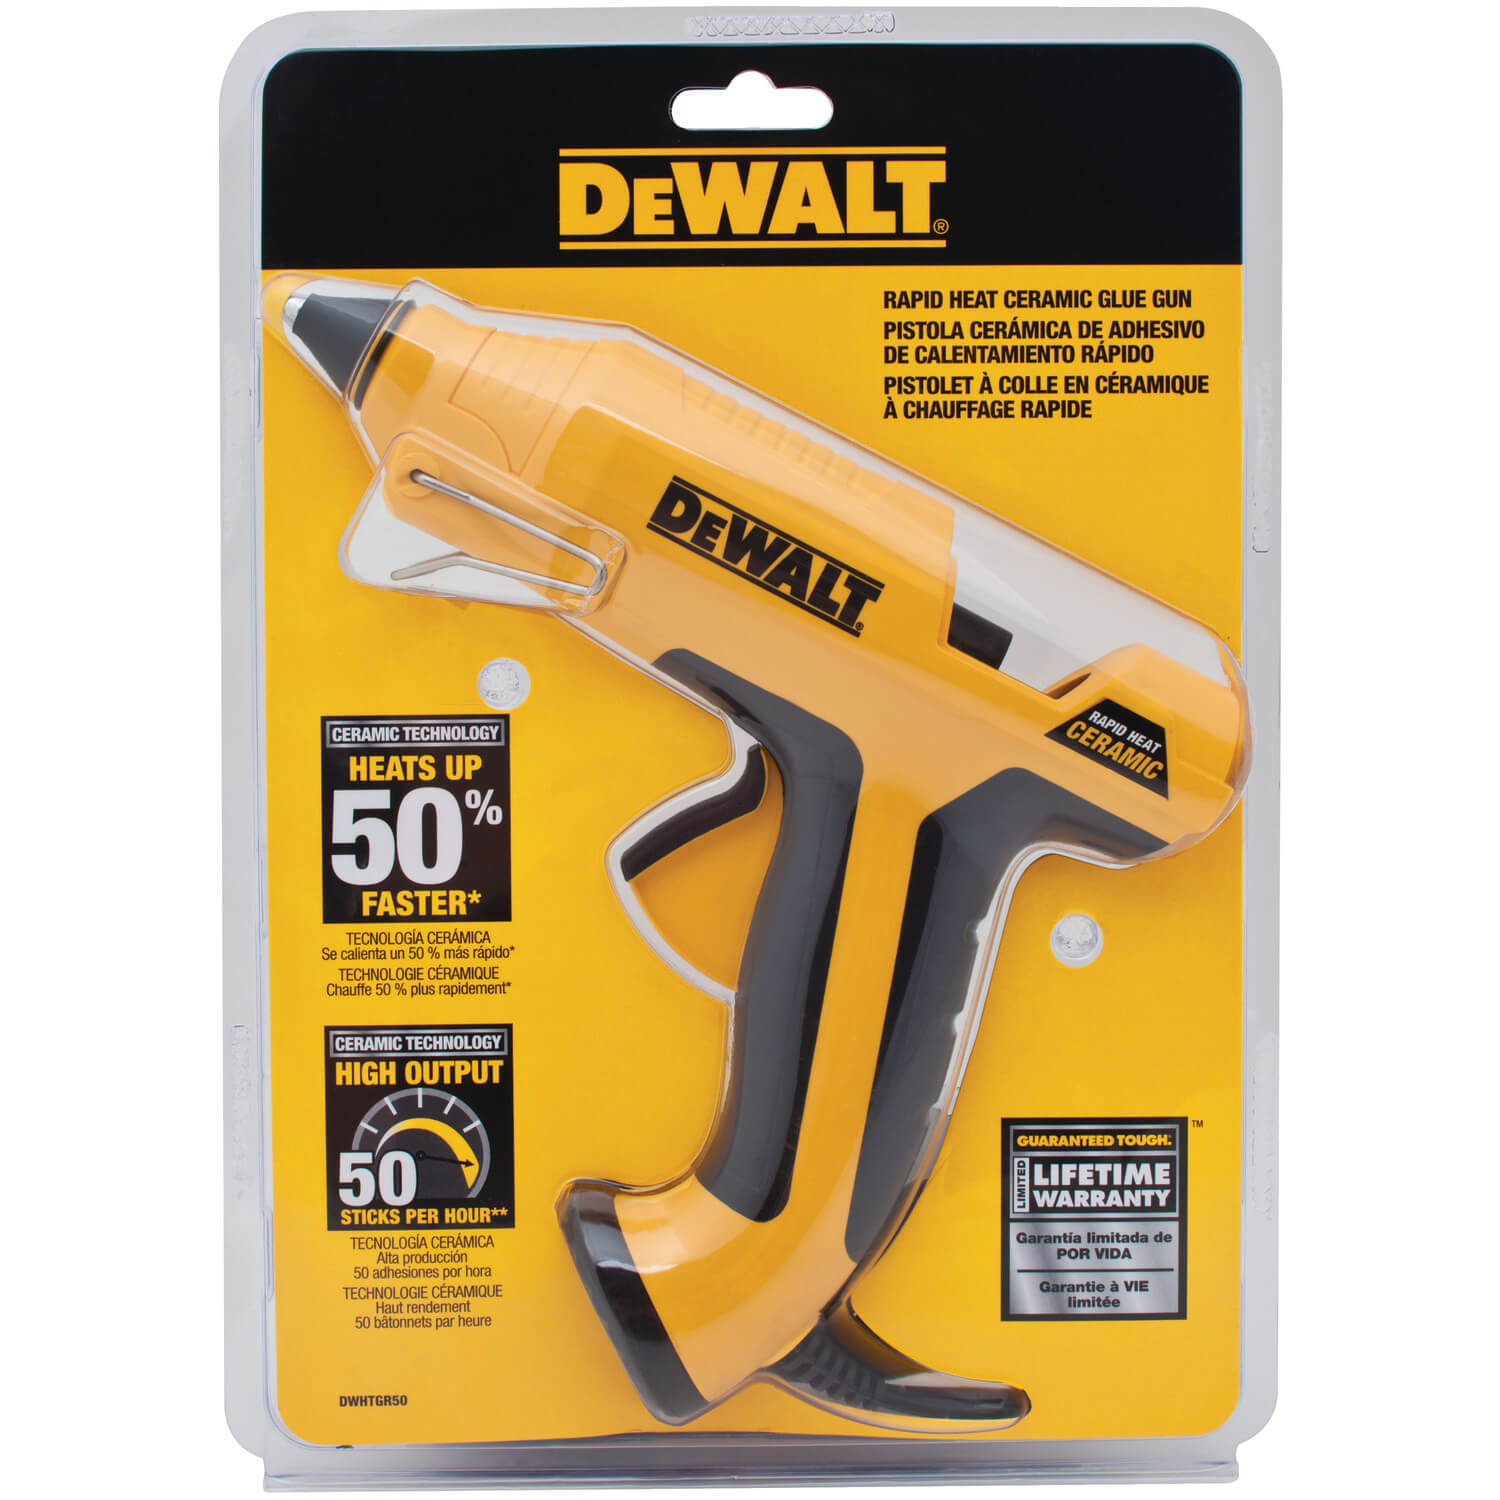 DEWALT DWHTGR50 RAPID HEAT CERAMIC GLUE GUN - wise-line-tools